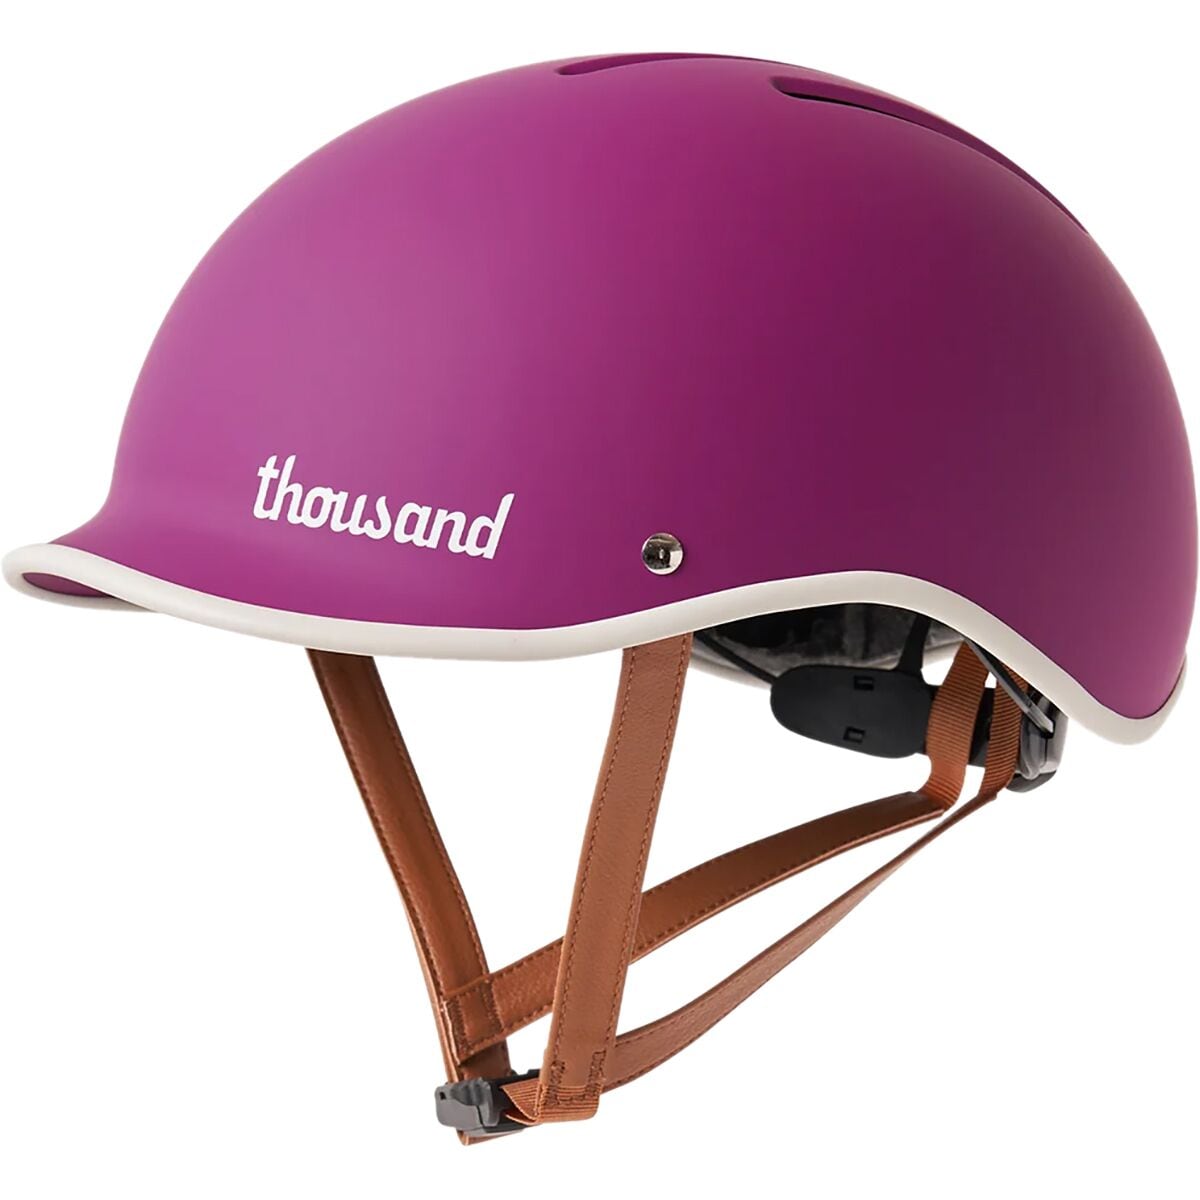 Thousand Heritage 2.0 Helmet Vibrant Orchid, L